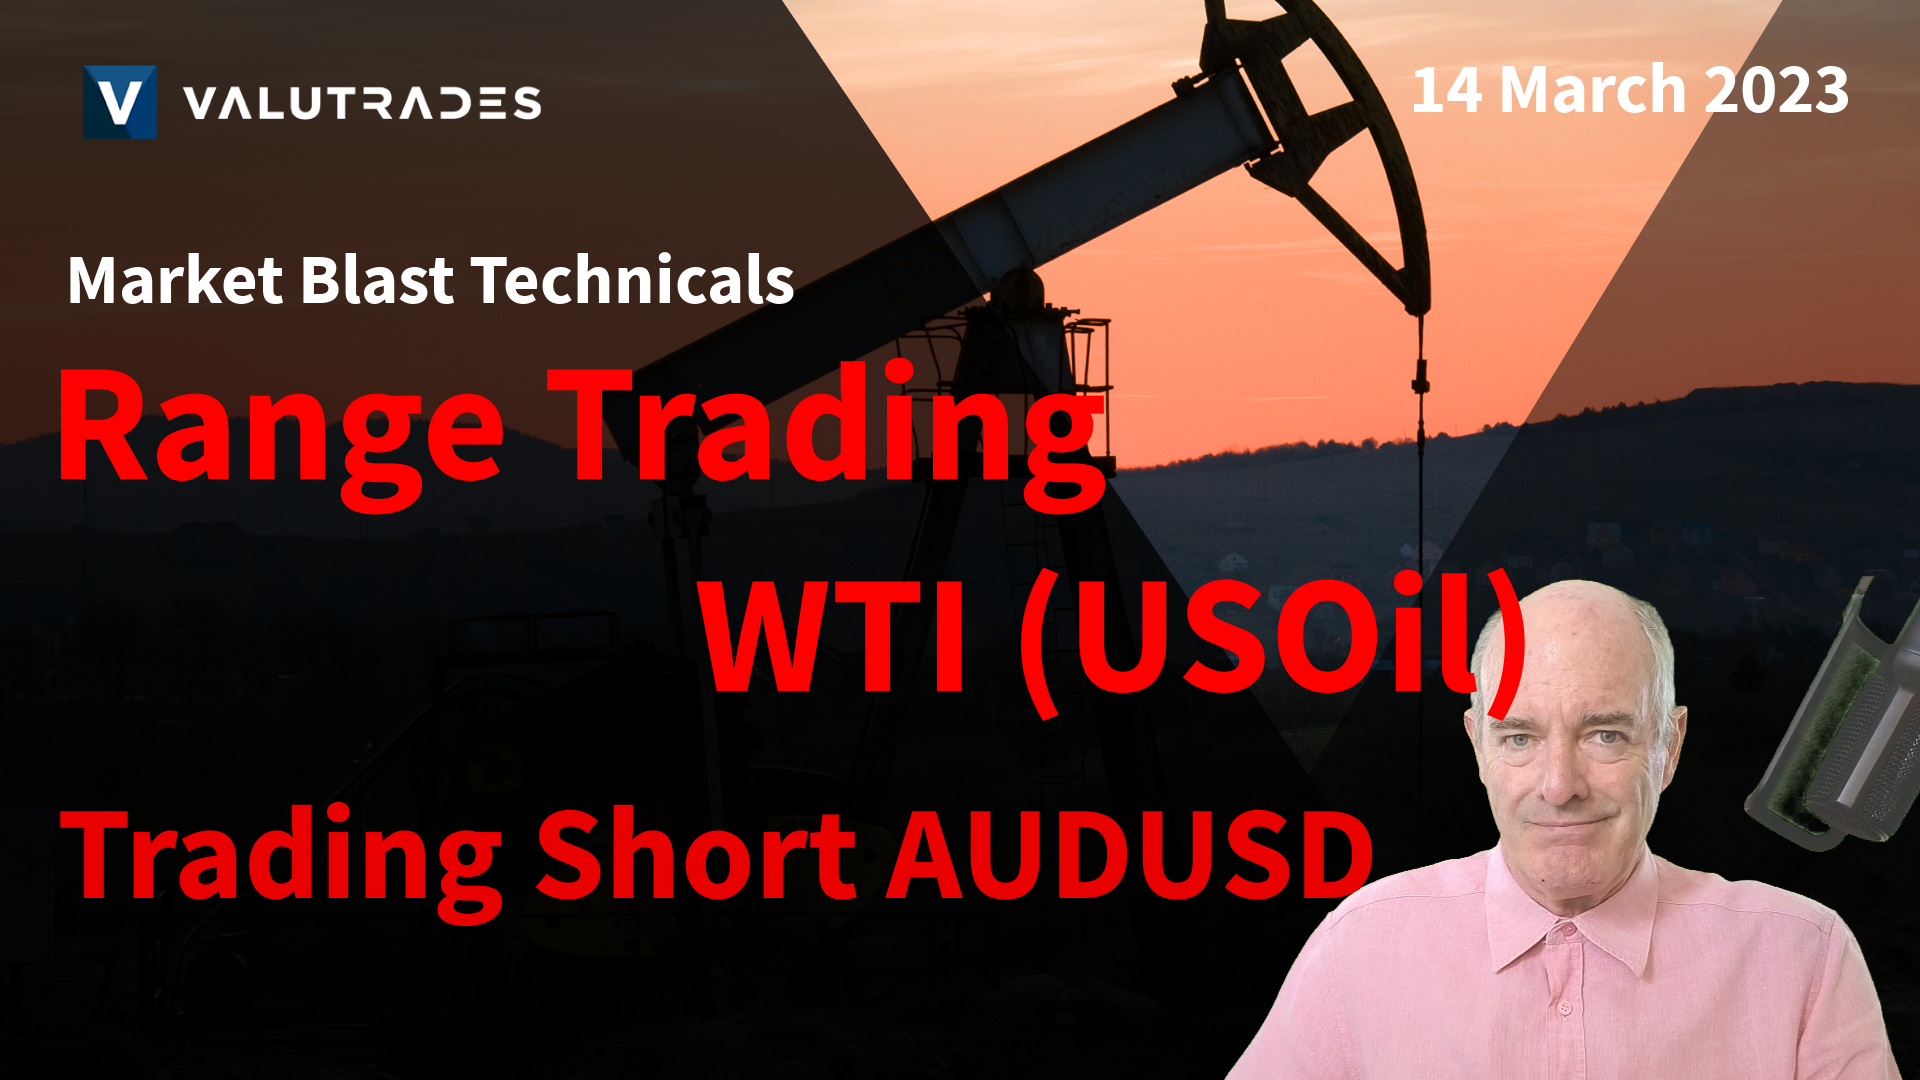 Range Trading WTI (USOil). Trading Short AUDUSD. AUDCHF at Pandemic Levels.